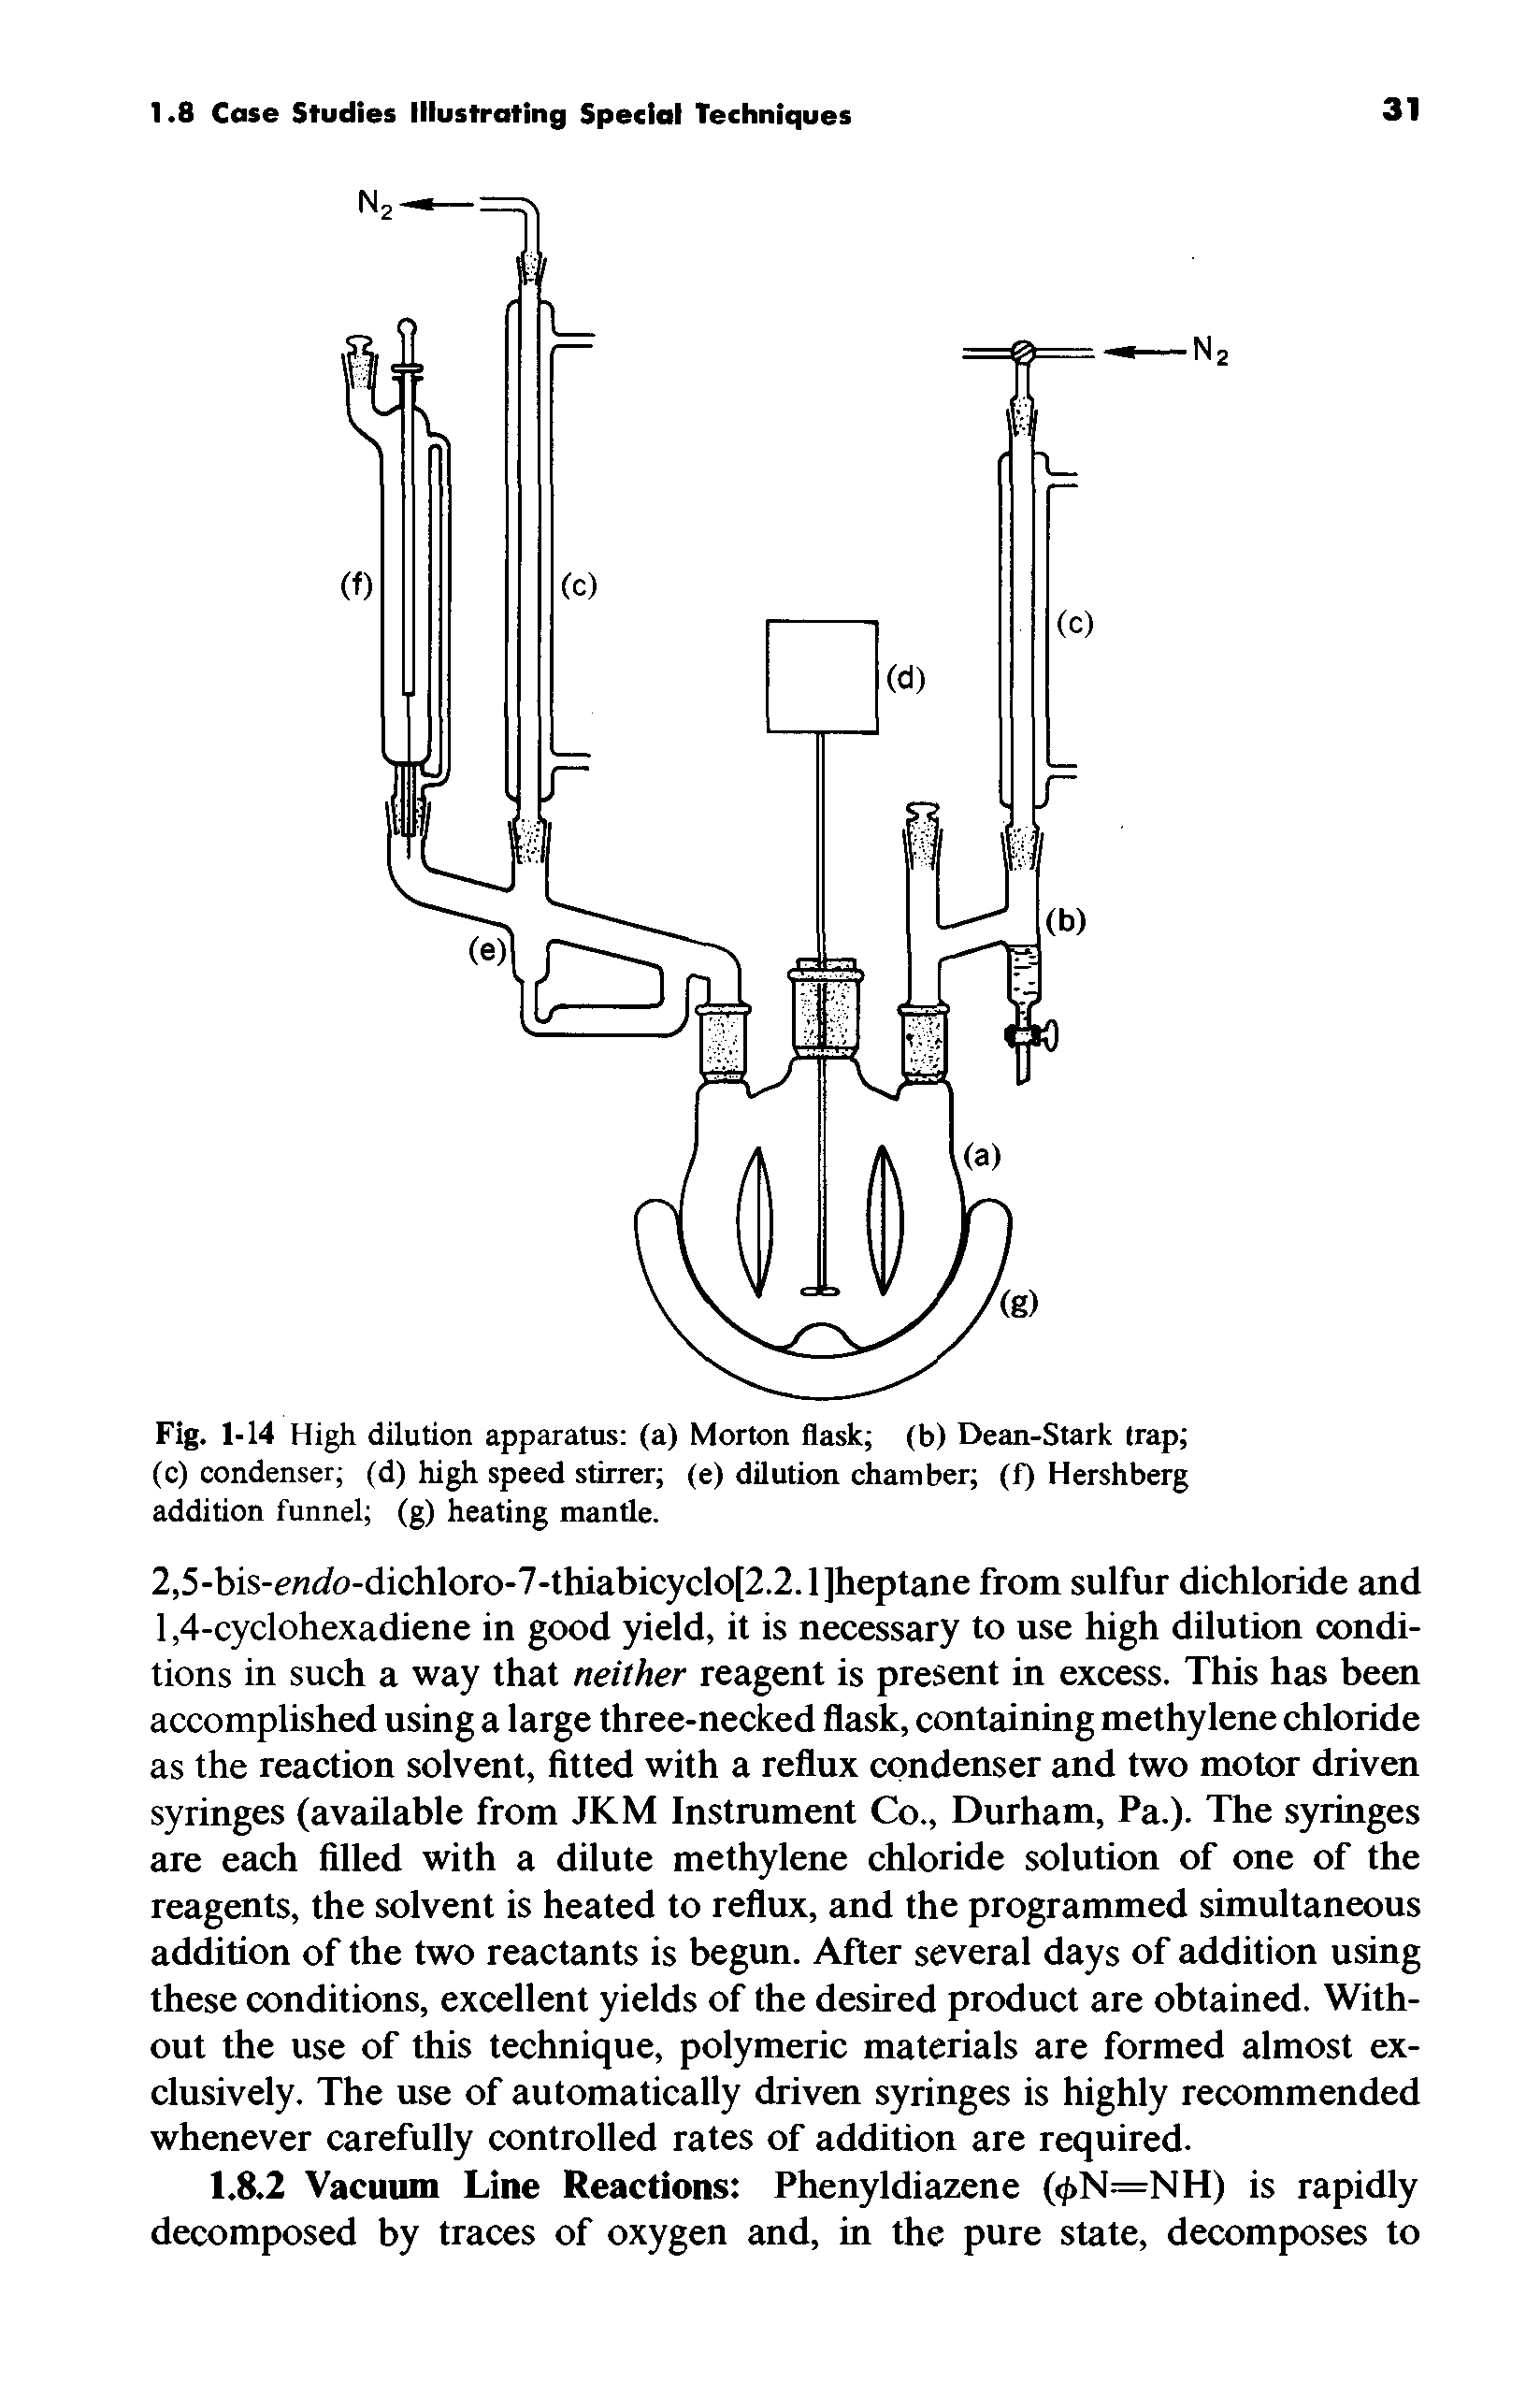 Fig. 1-14 High dilution apparatus (a) Morton flask (b) Dean-Stark trap ...